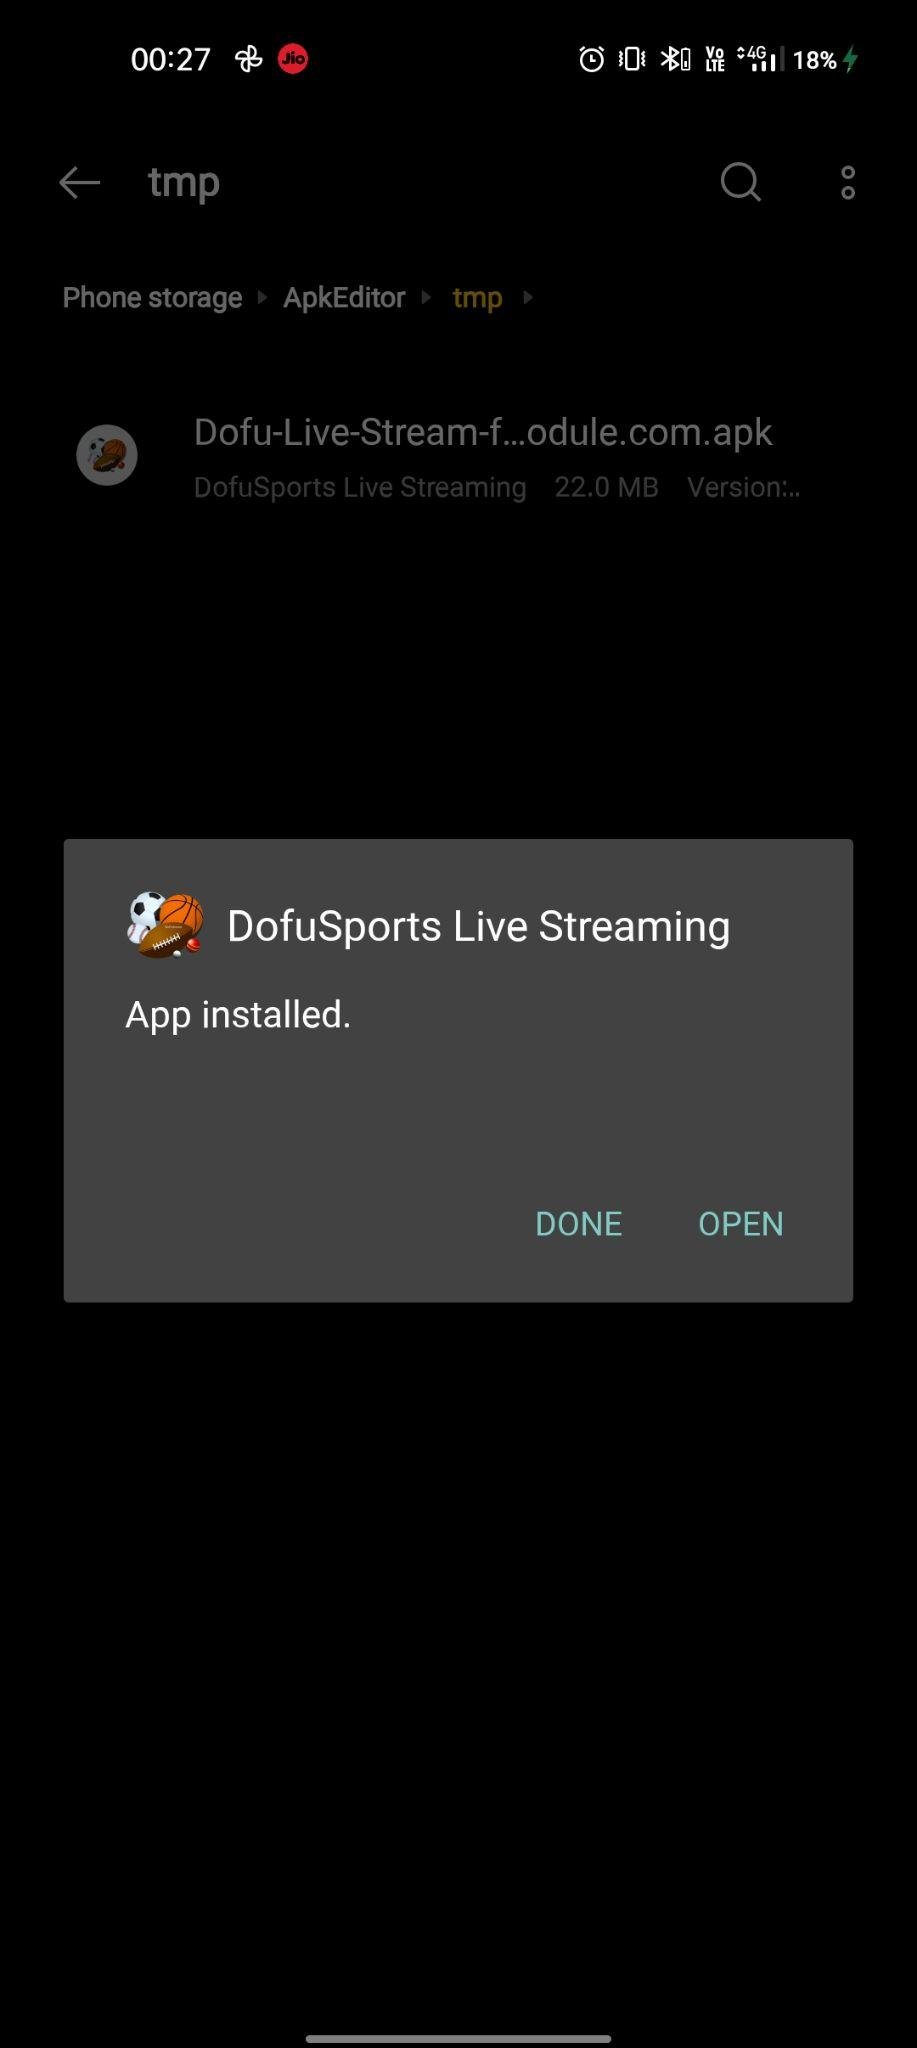 DofuSports apk installed